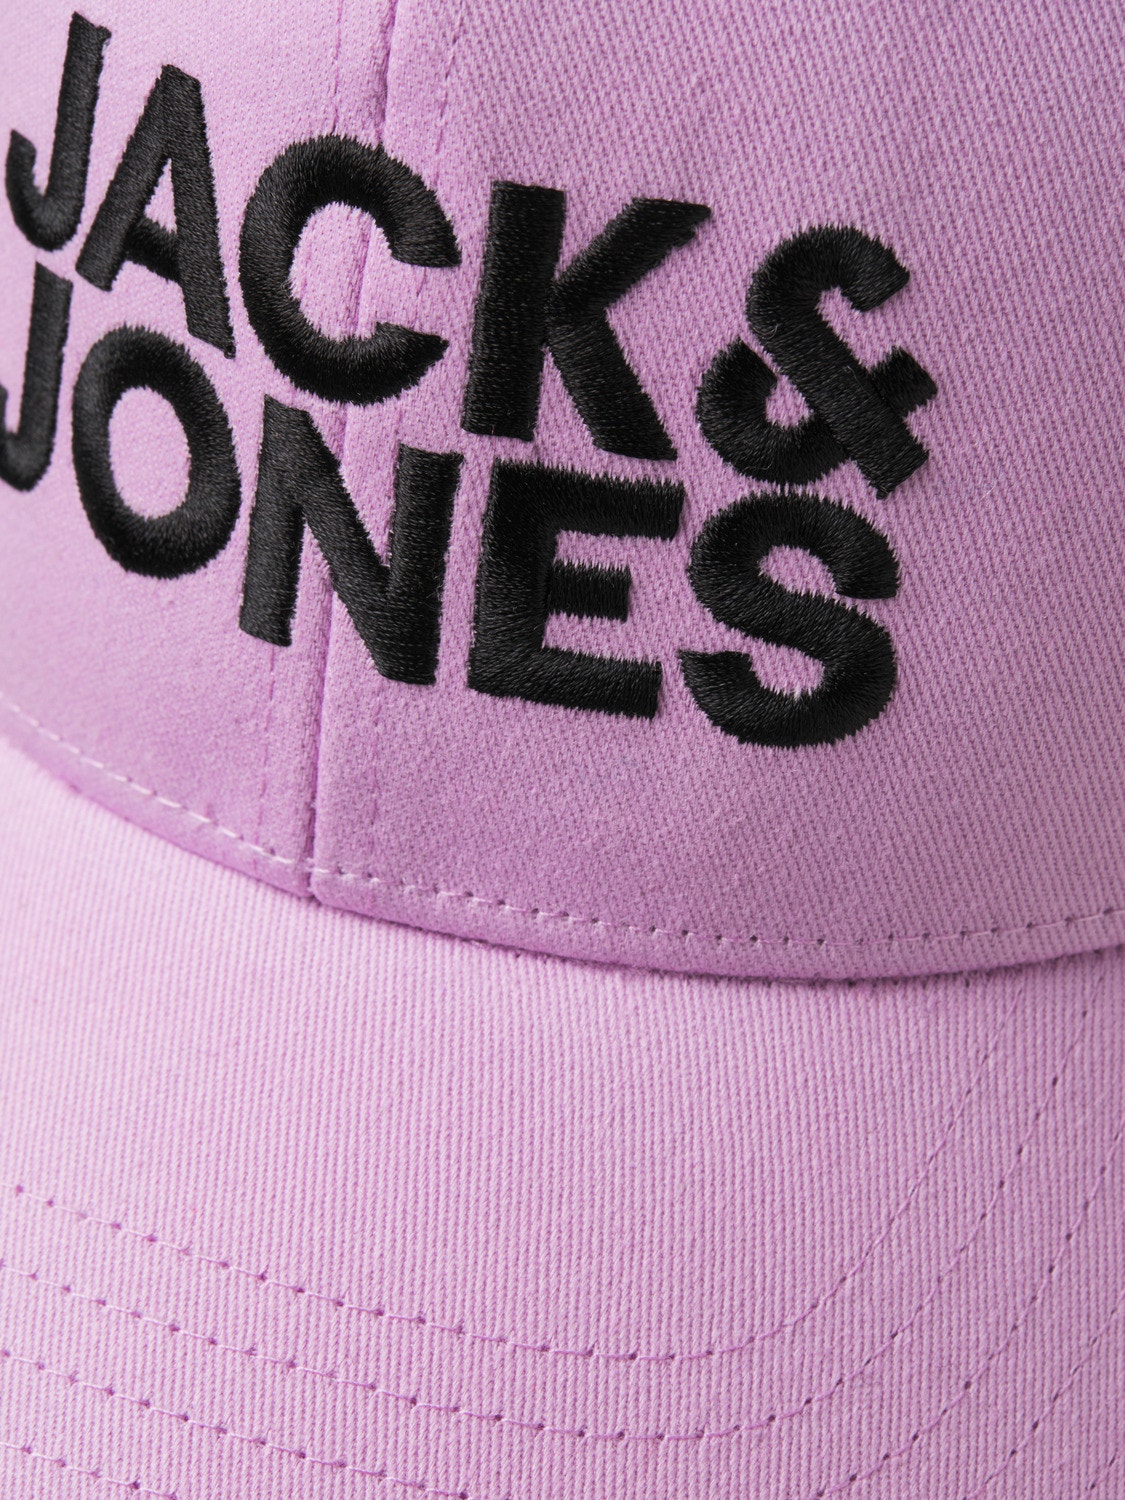 Jack & Jones Baseballkeps -Purple Rose - 12254296